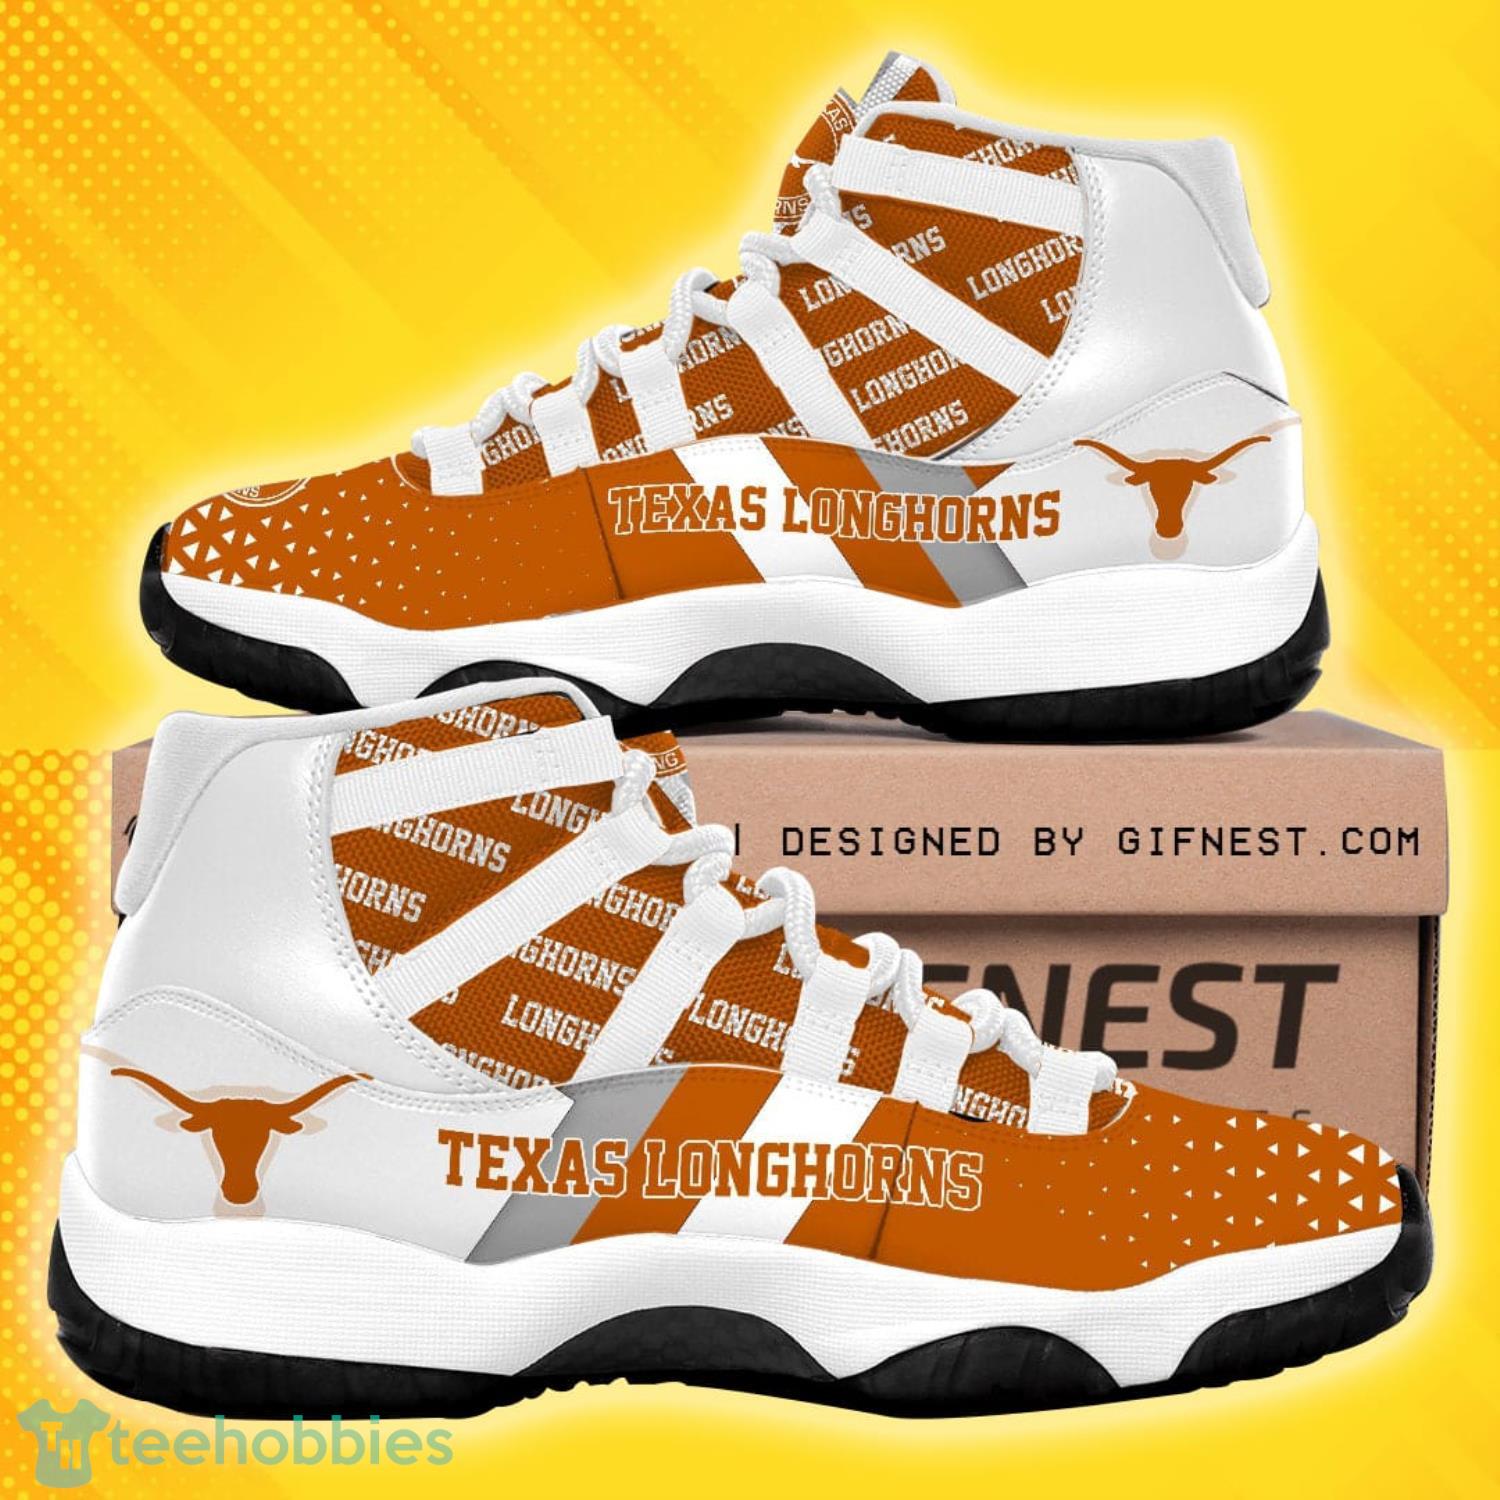 Texas Longhorns Team Air Jordan 11 Shoes For Fans Product Photo 1